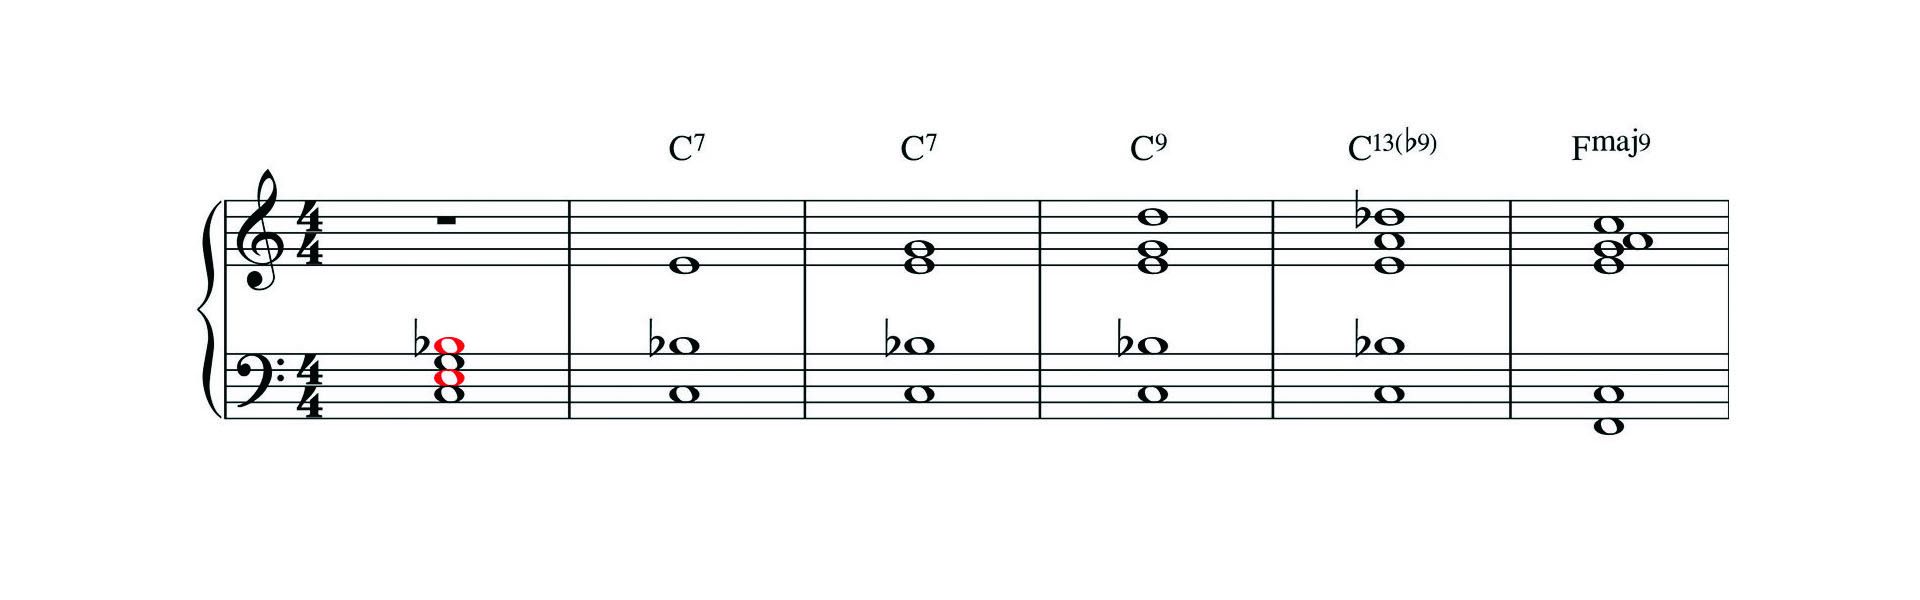 Dominant 7th Chord Variations